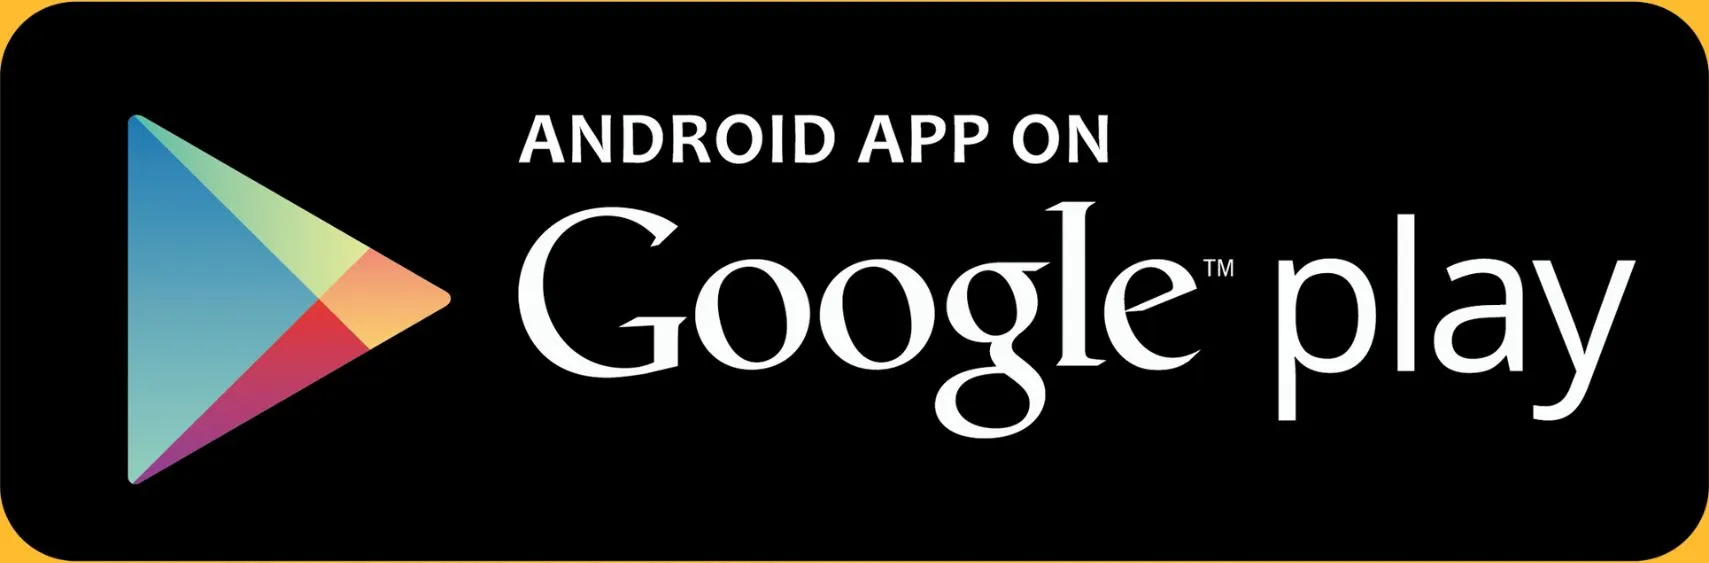 Vedanta IAS Academy Android App